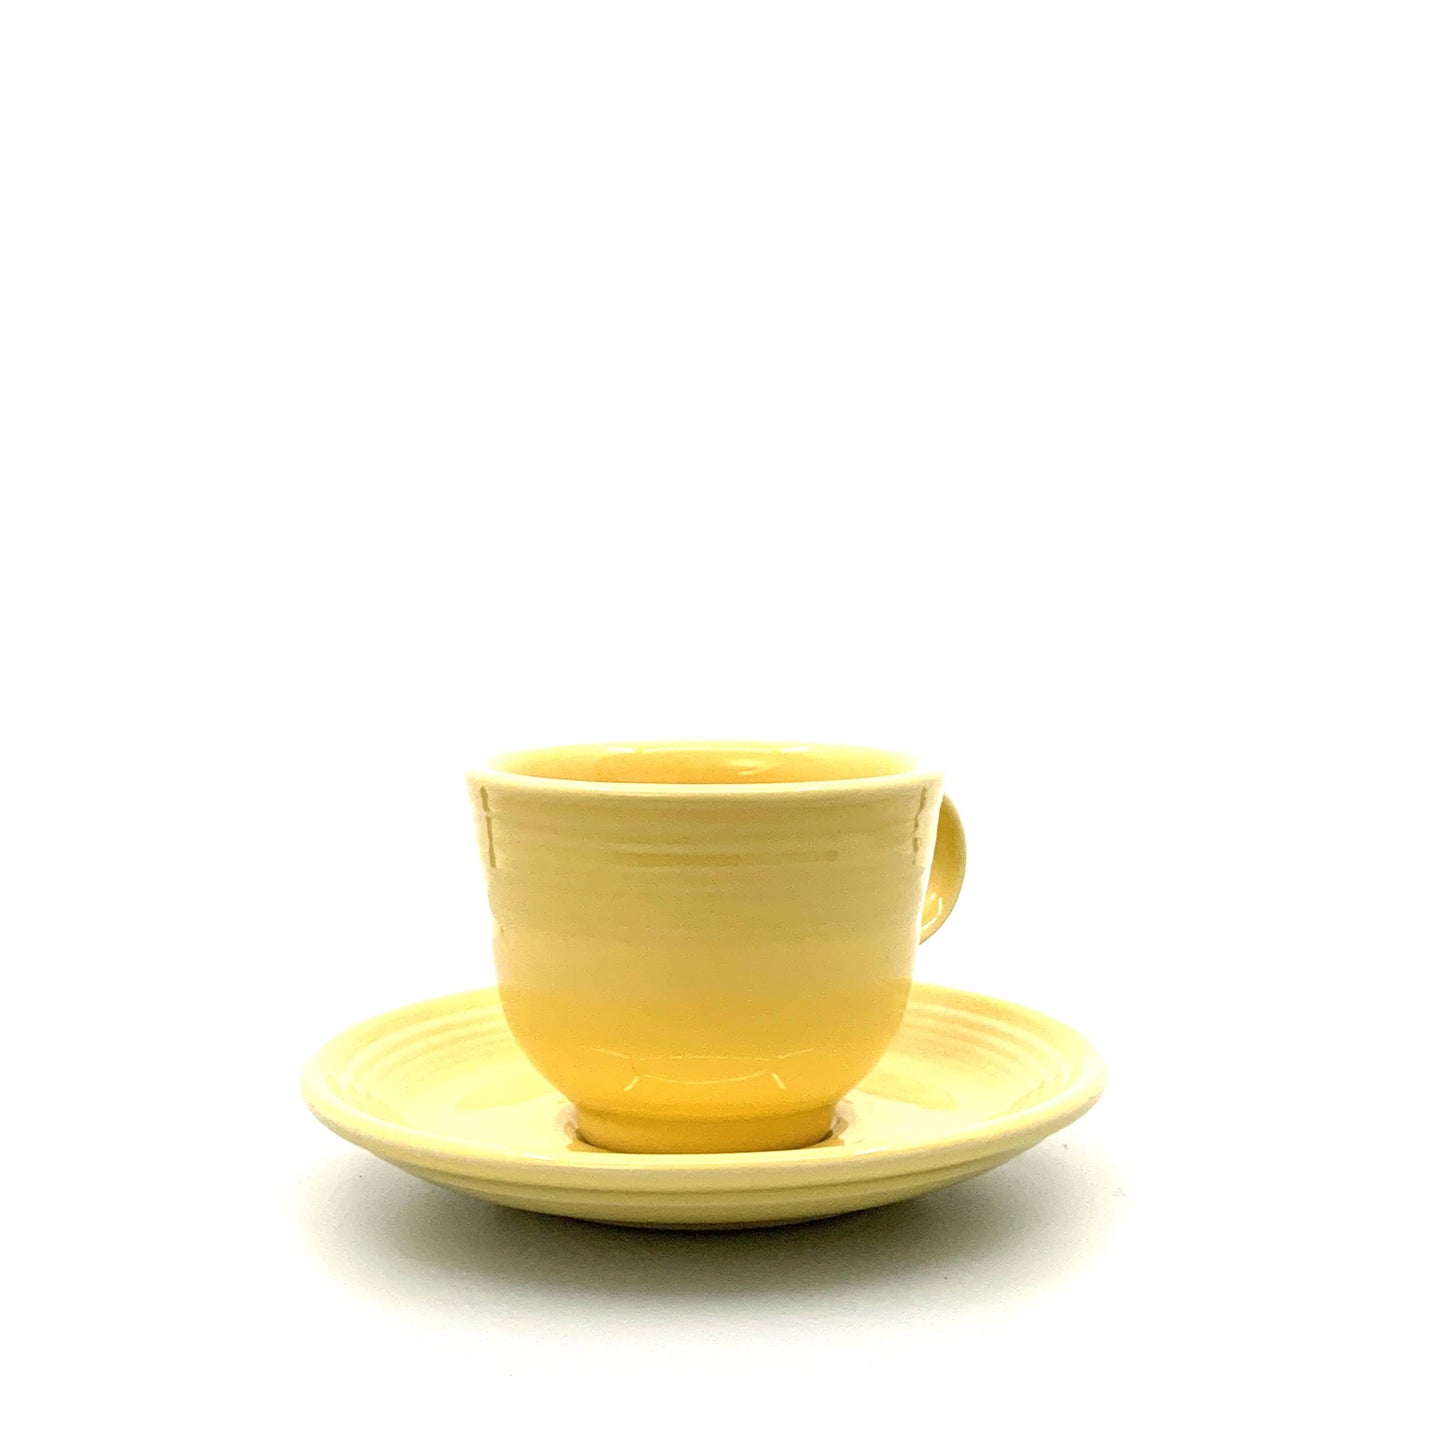 Fiesta Banana Yellow Replacement Tea Coffee Cup and Saucer Set Homer Laughlin Co USA.